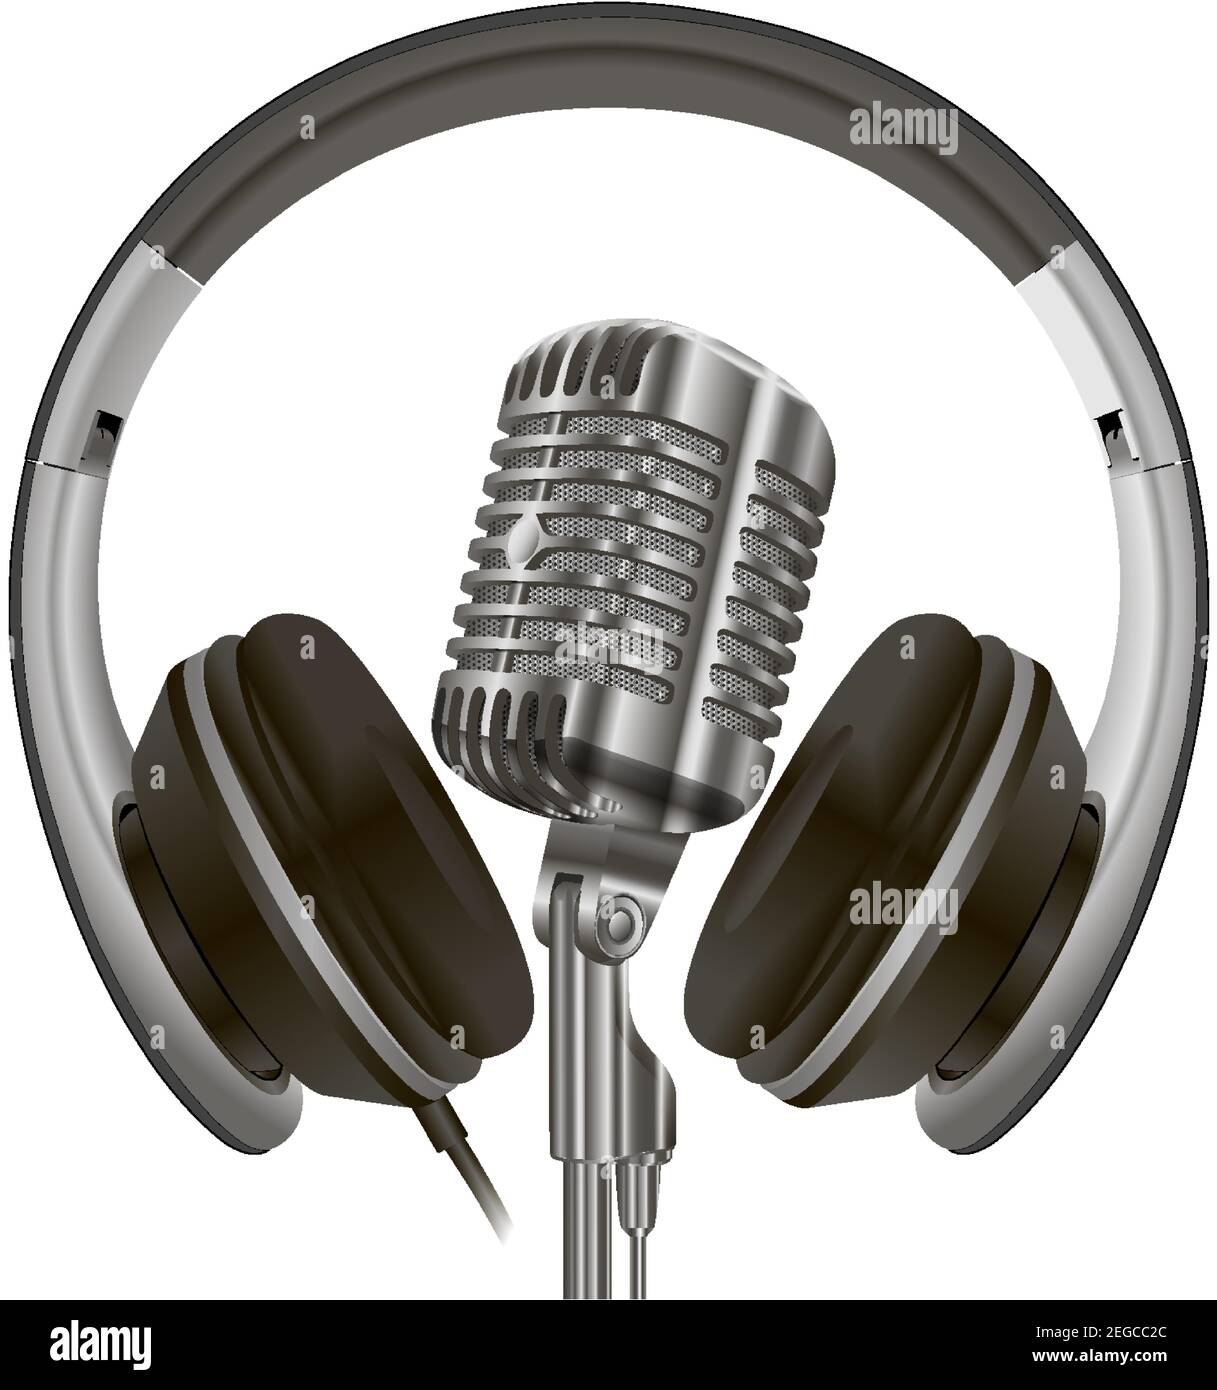 https://c8.alamy.com/comp/2EGCC2C/studio-microphone-headphone-old-vintage-radio-karaoke-or-standup-mic-earphone-gadget-illustration-modern-3d-realistic-headset-dj-mockup-set-rec-2EGCC2C.jpg